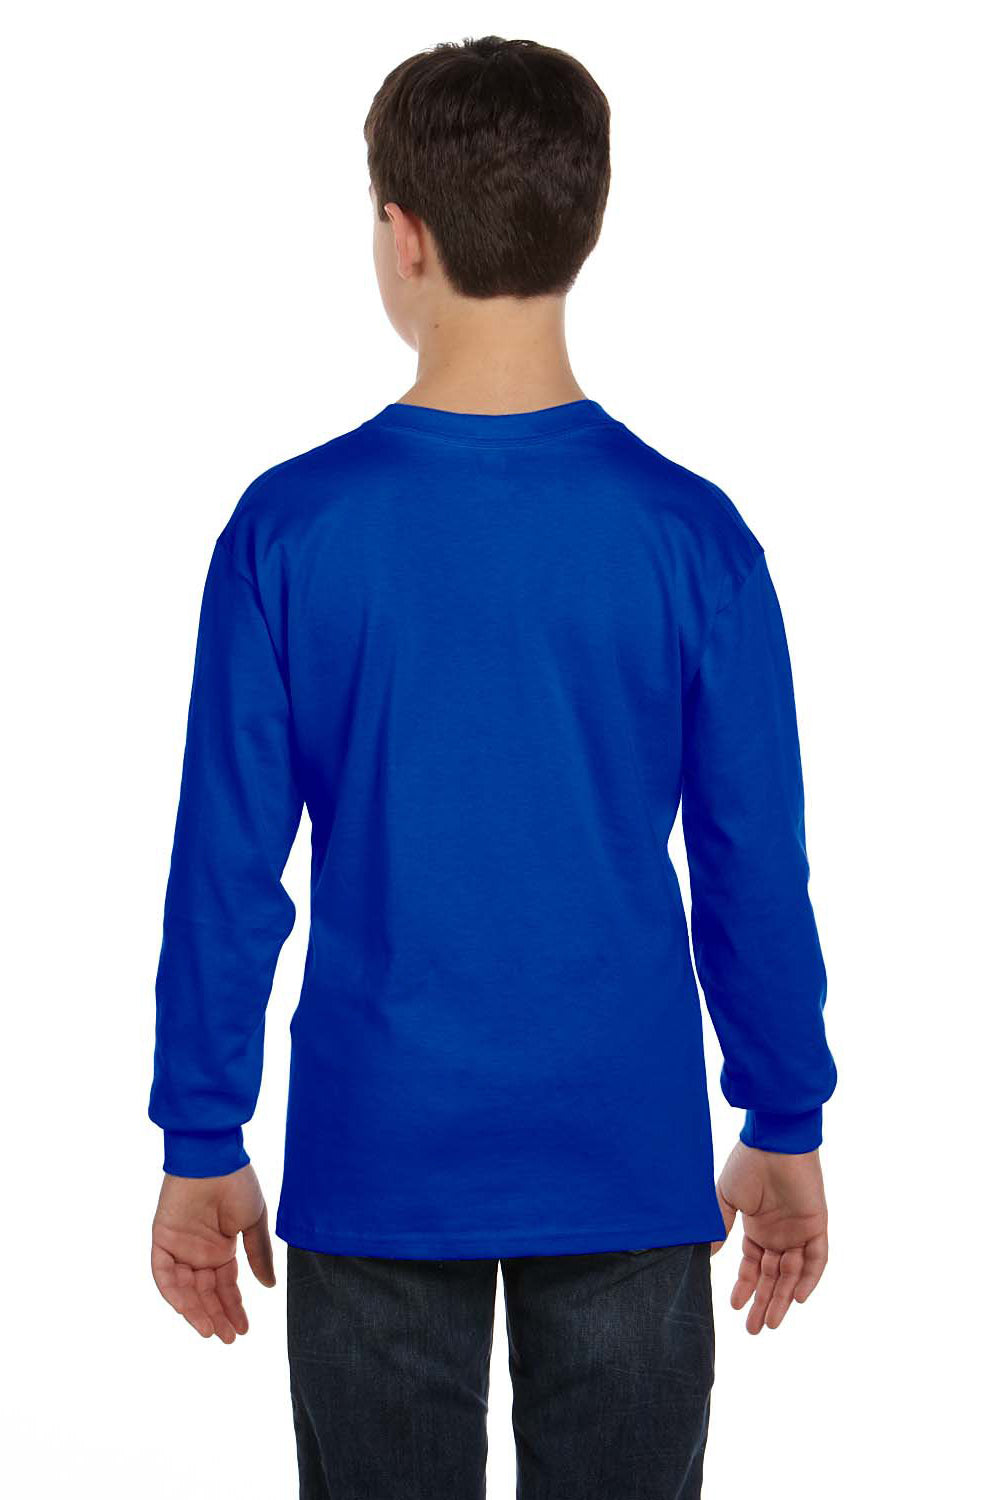 Gildan G540B Youth Long Sleeve Crewneck T-Shirt Royal Blue Back